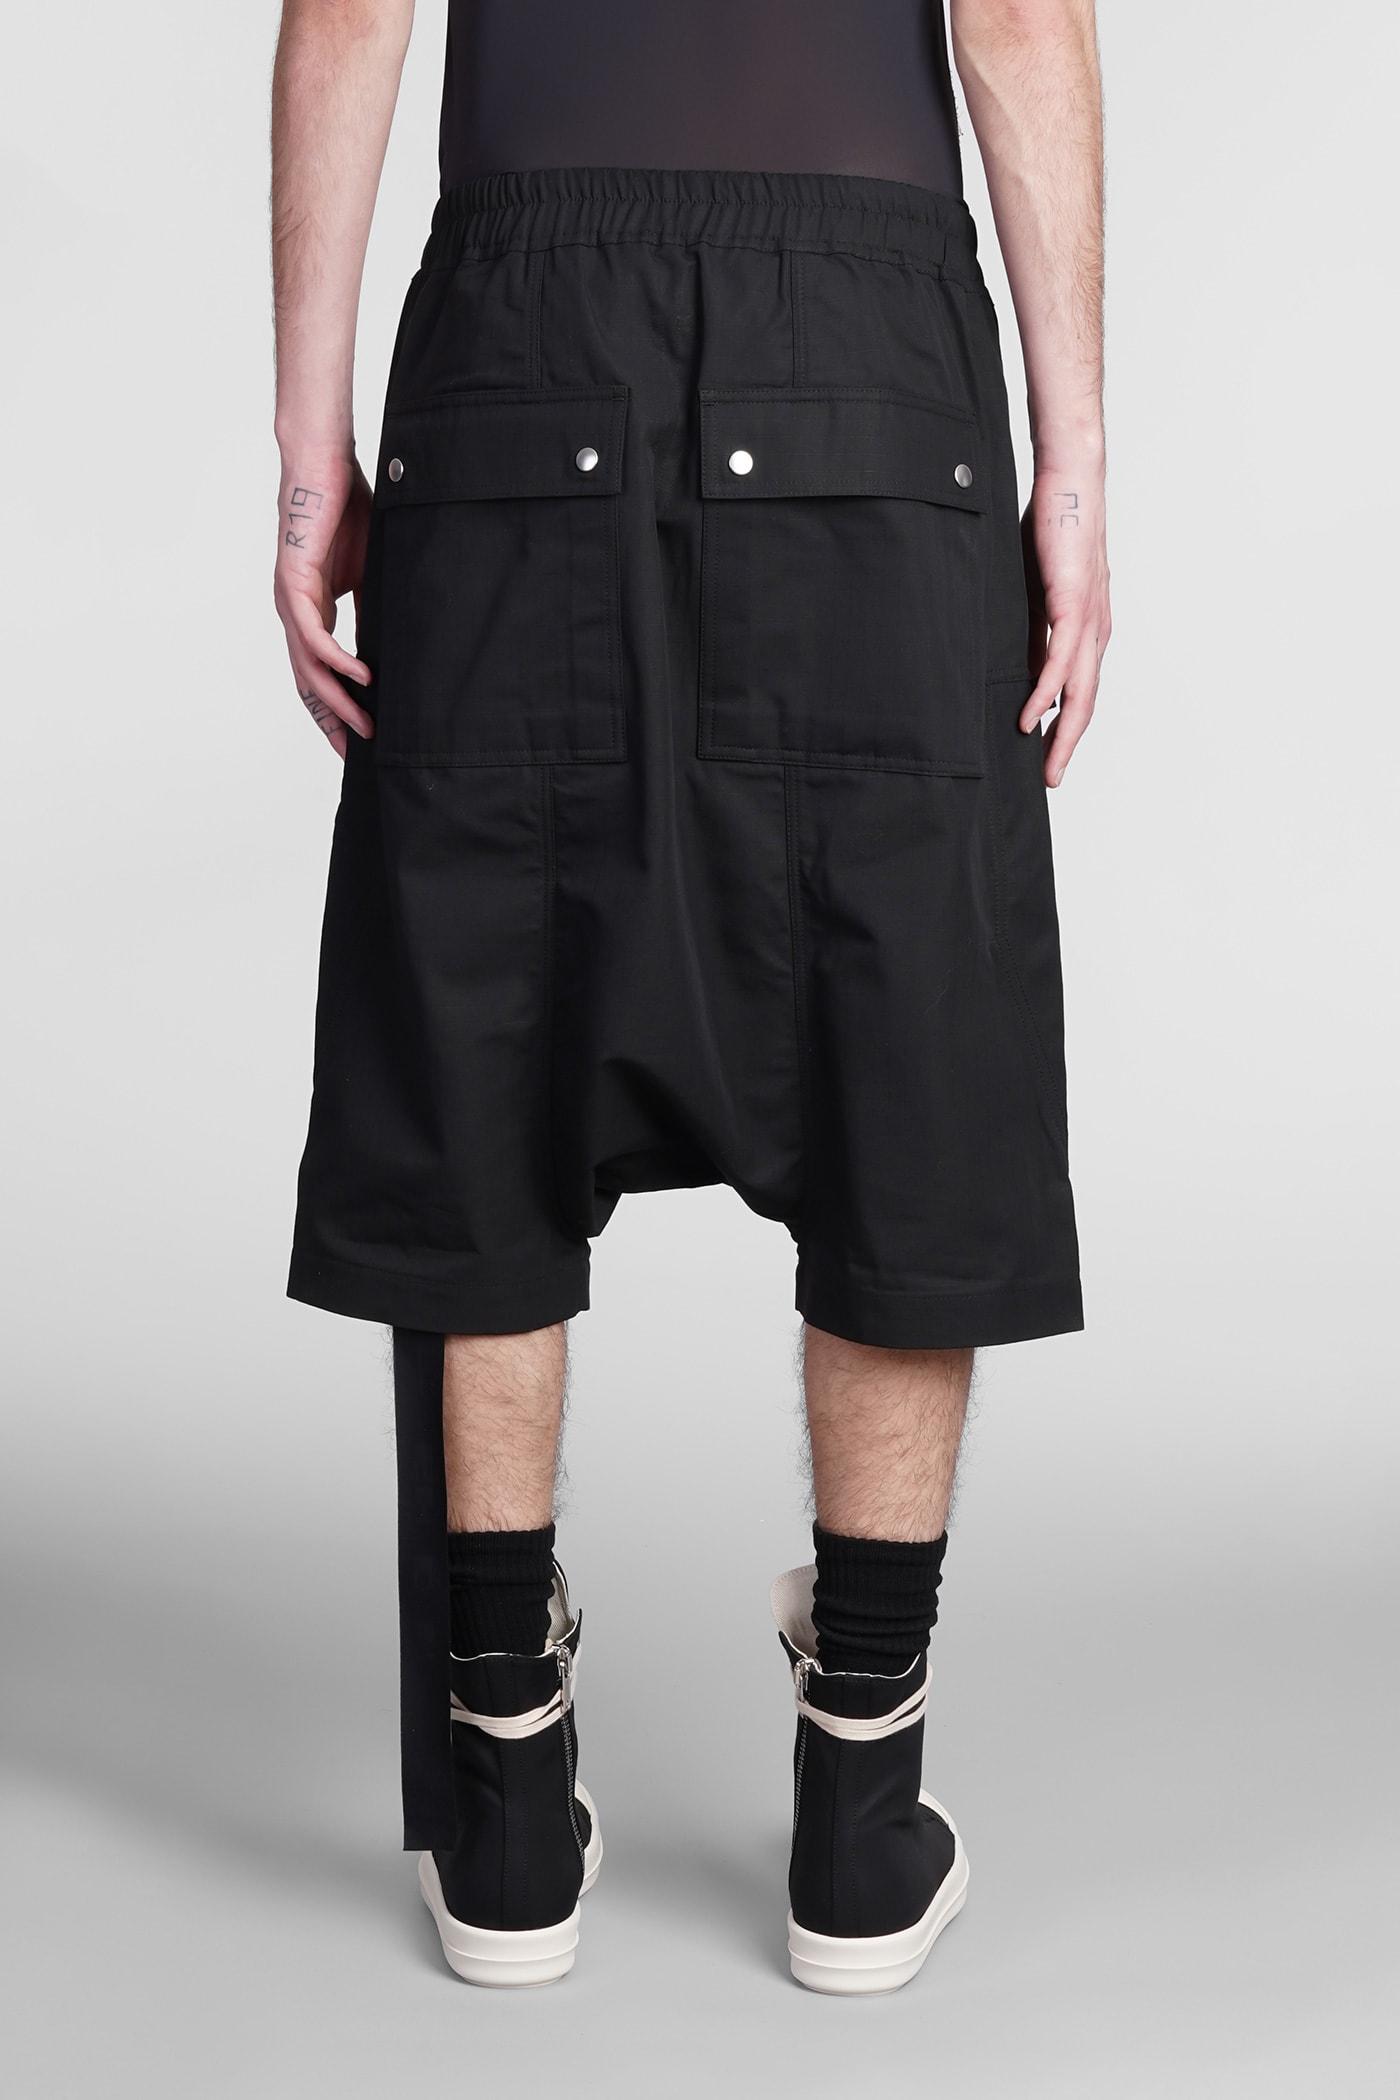 Rick Owens DRKSHDW Bauhaus Pods Shorts In Black Cotton for Men | Lyst